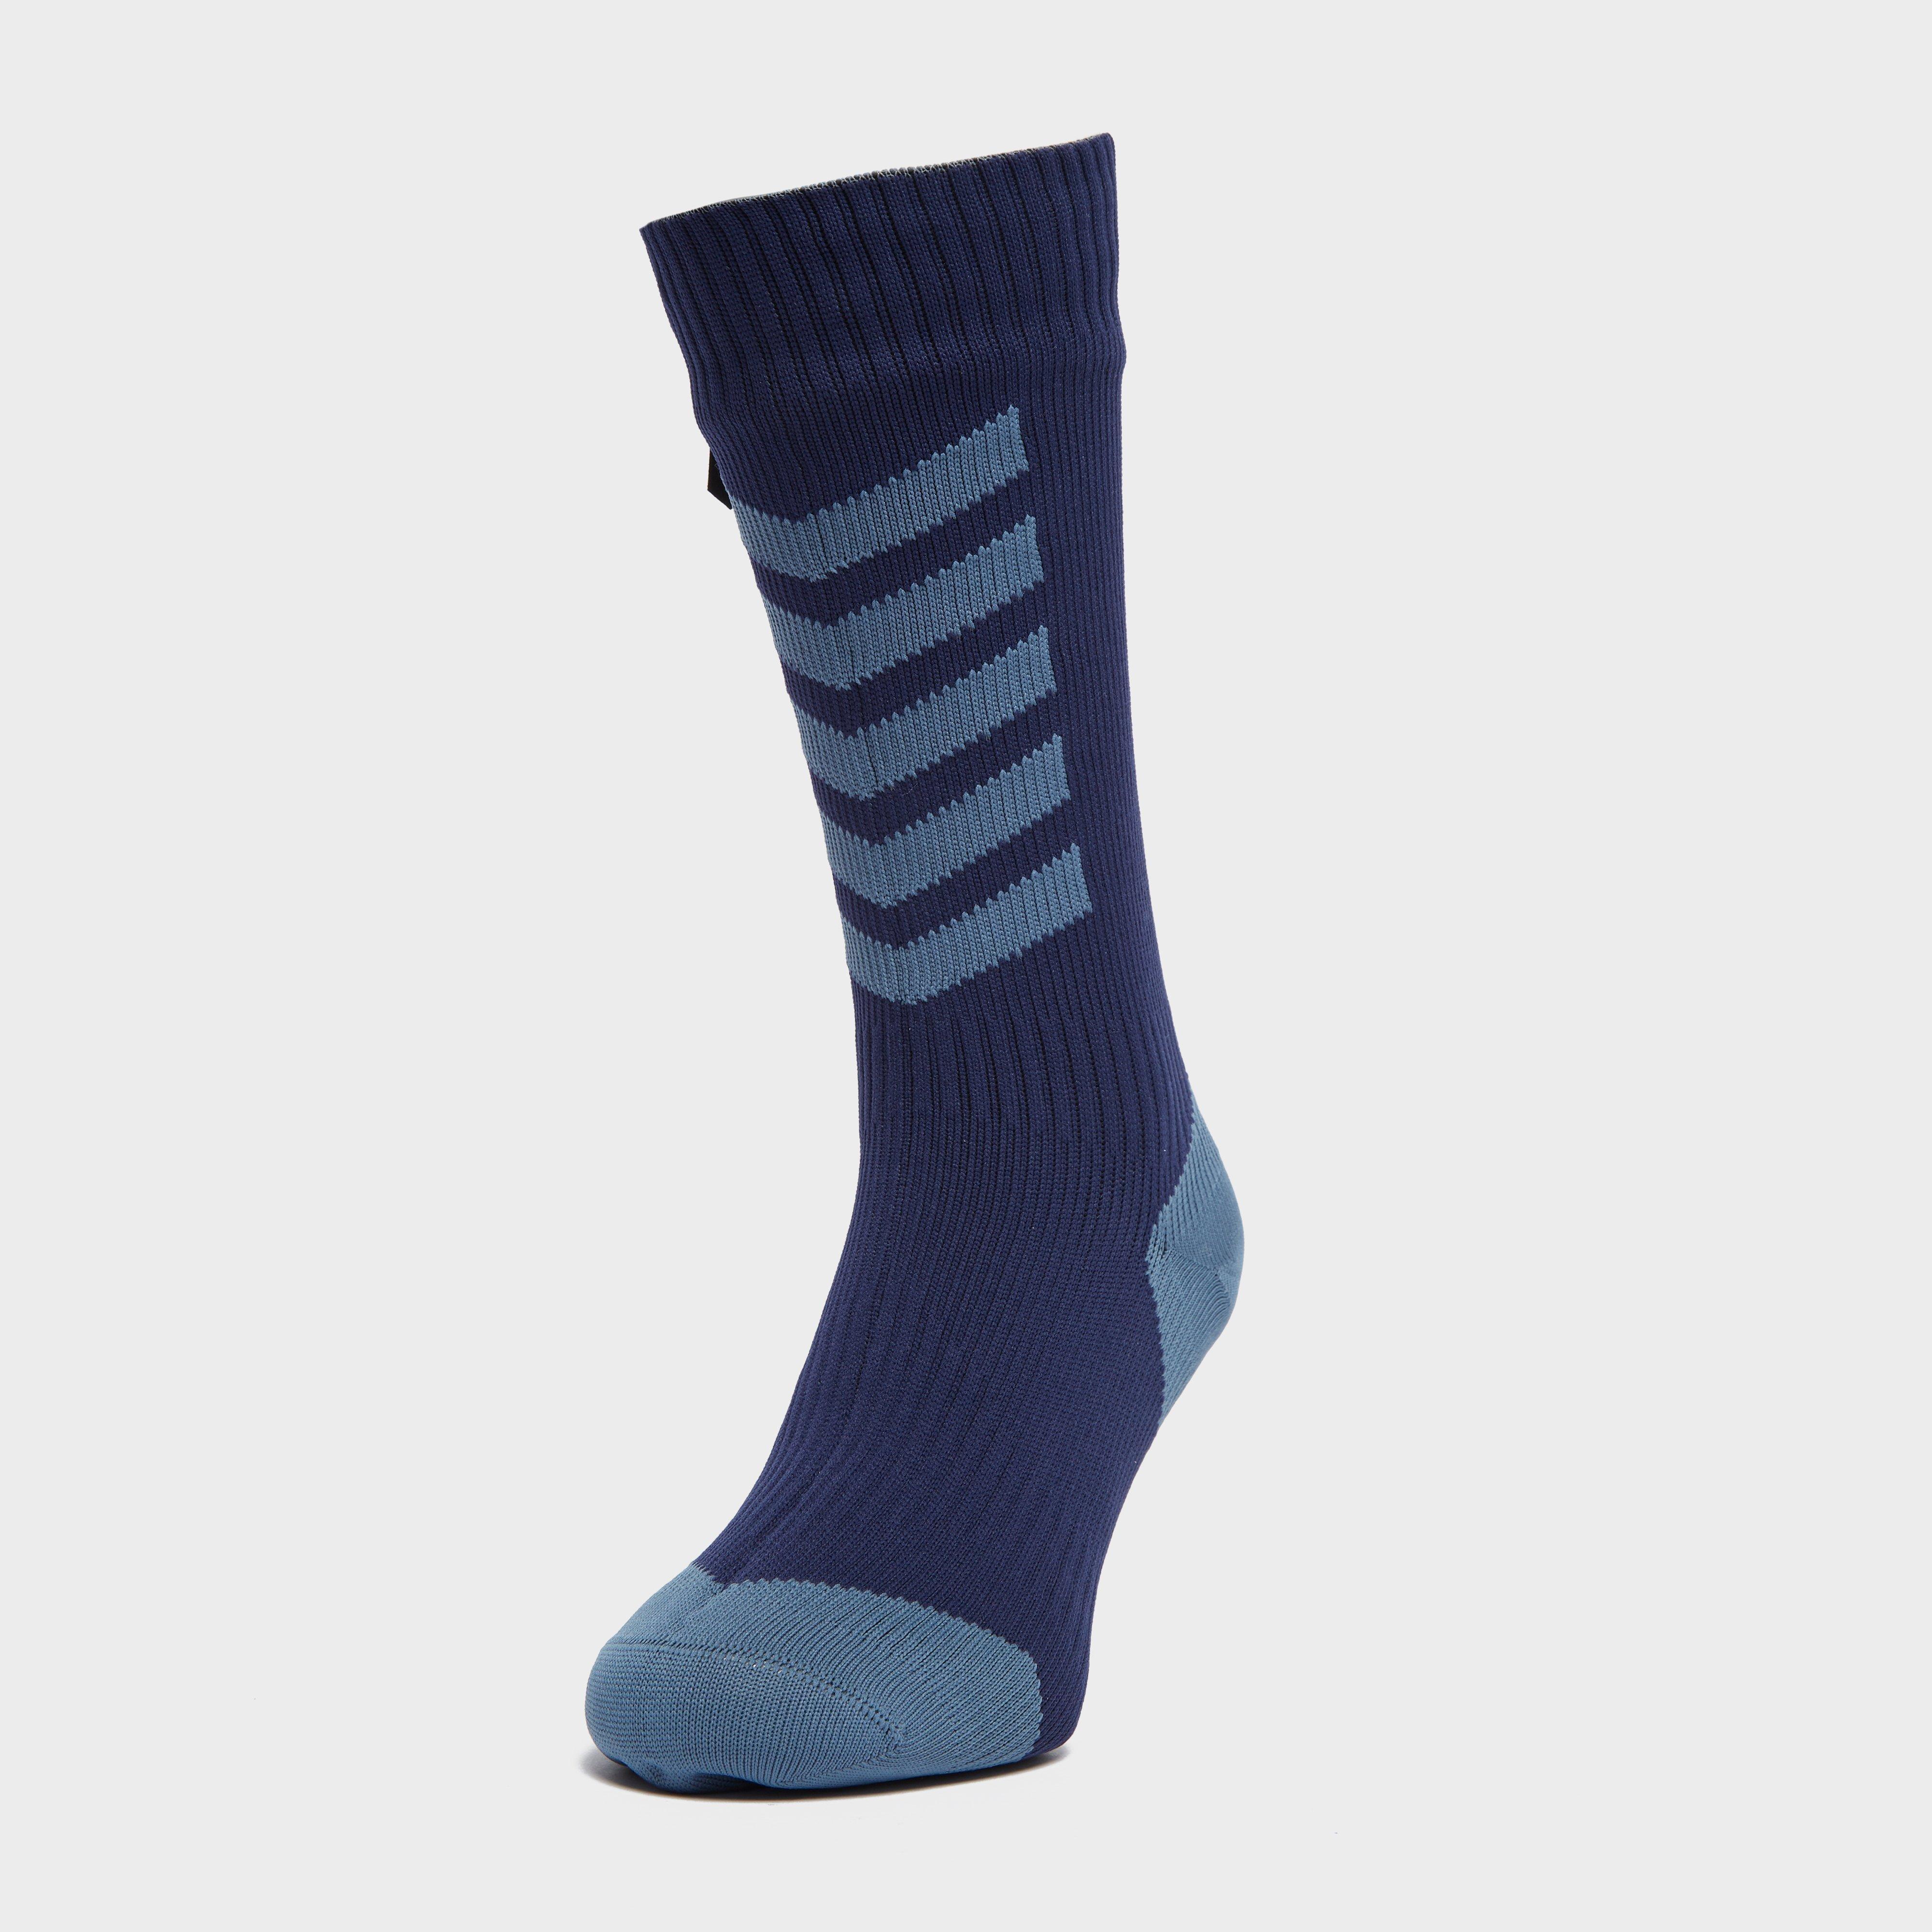  Sealskinz Waterproof Cold Weather Mid Length Socks, Blue